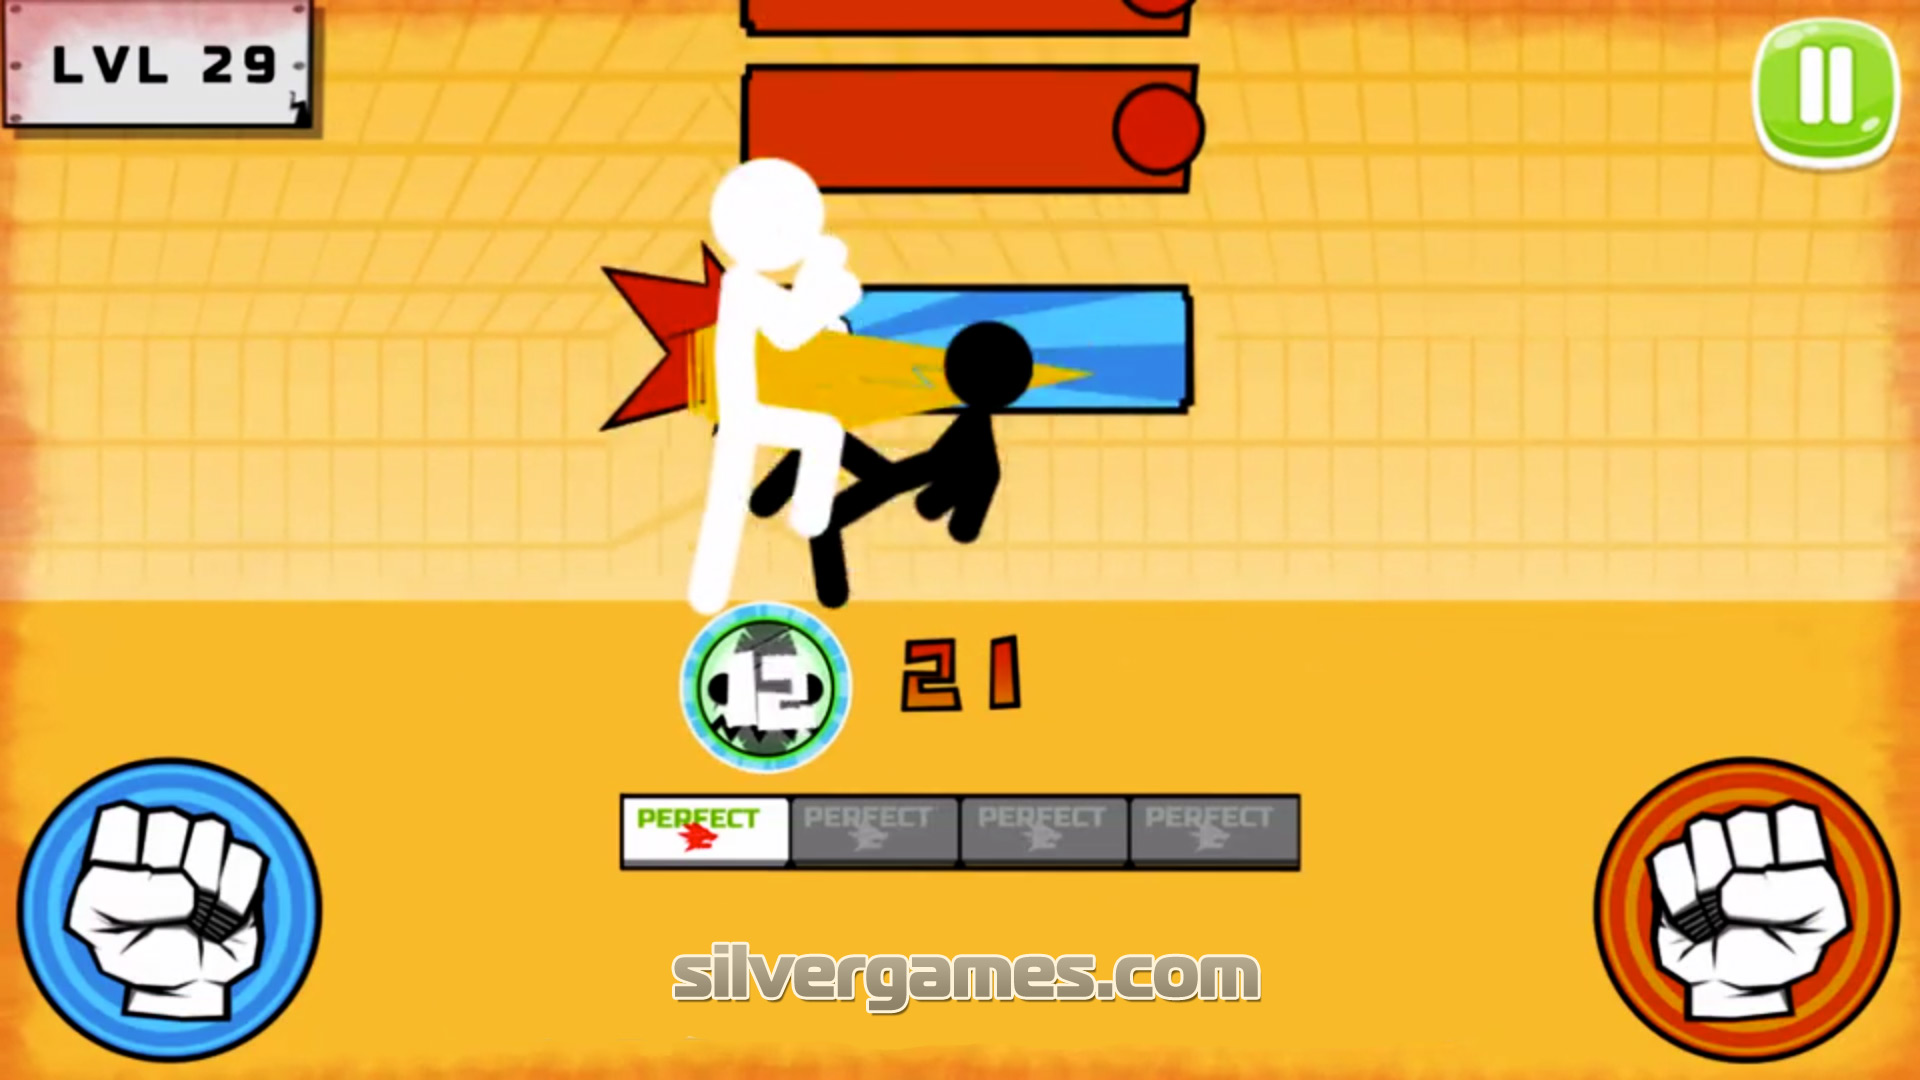 Stickman Fighter - Play Free Stickman Fighting Games Online